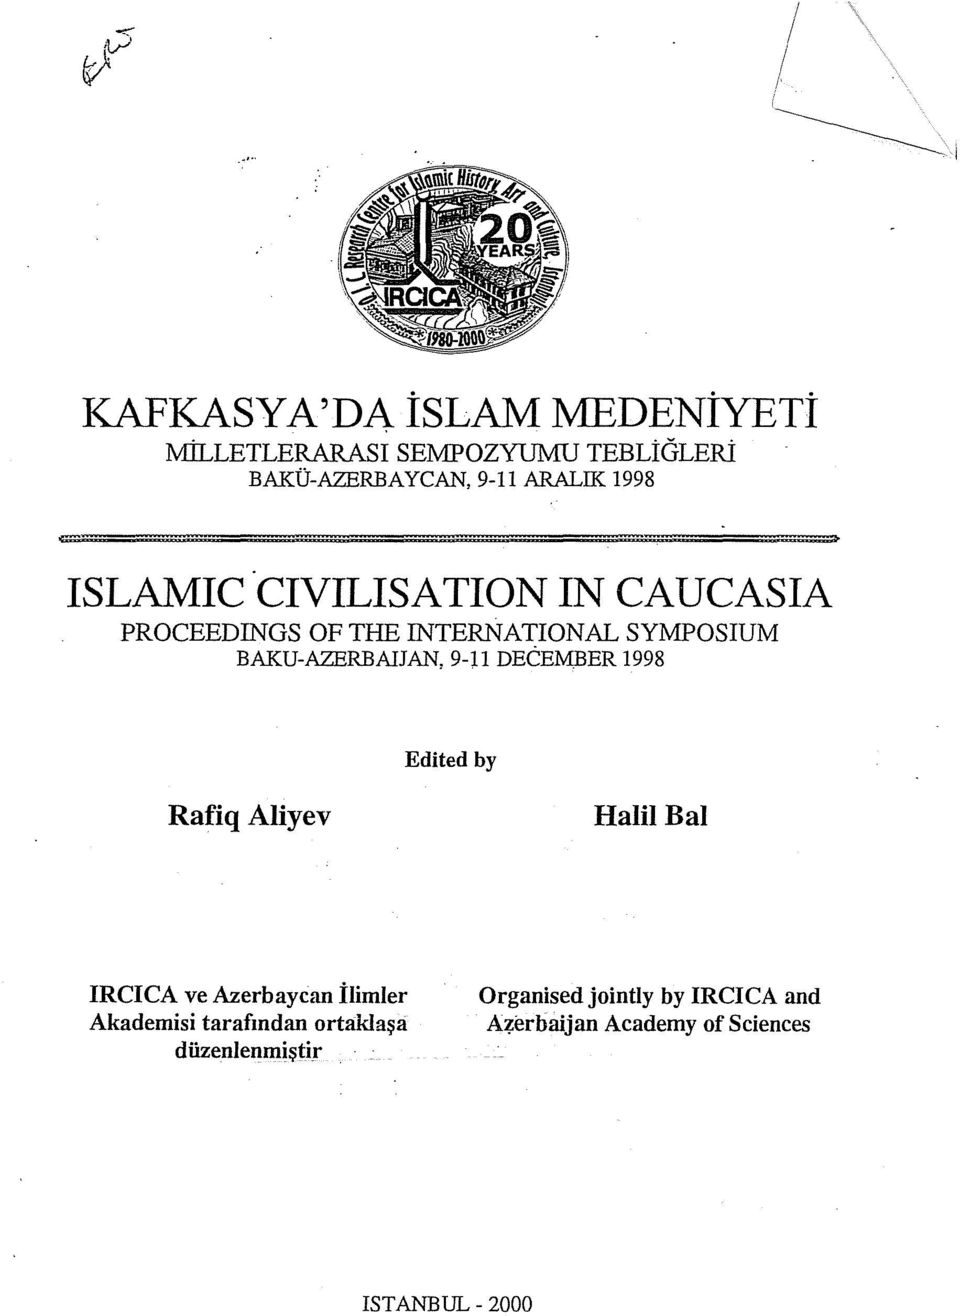 ISLAMIC CIVILISATION IN CAUCASIA PROCEEDINGS OF THE INTERNATIONAL SYMPOSIUM BAKU-AZERBAIJAN, 9-11